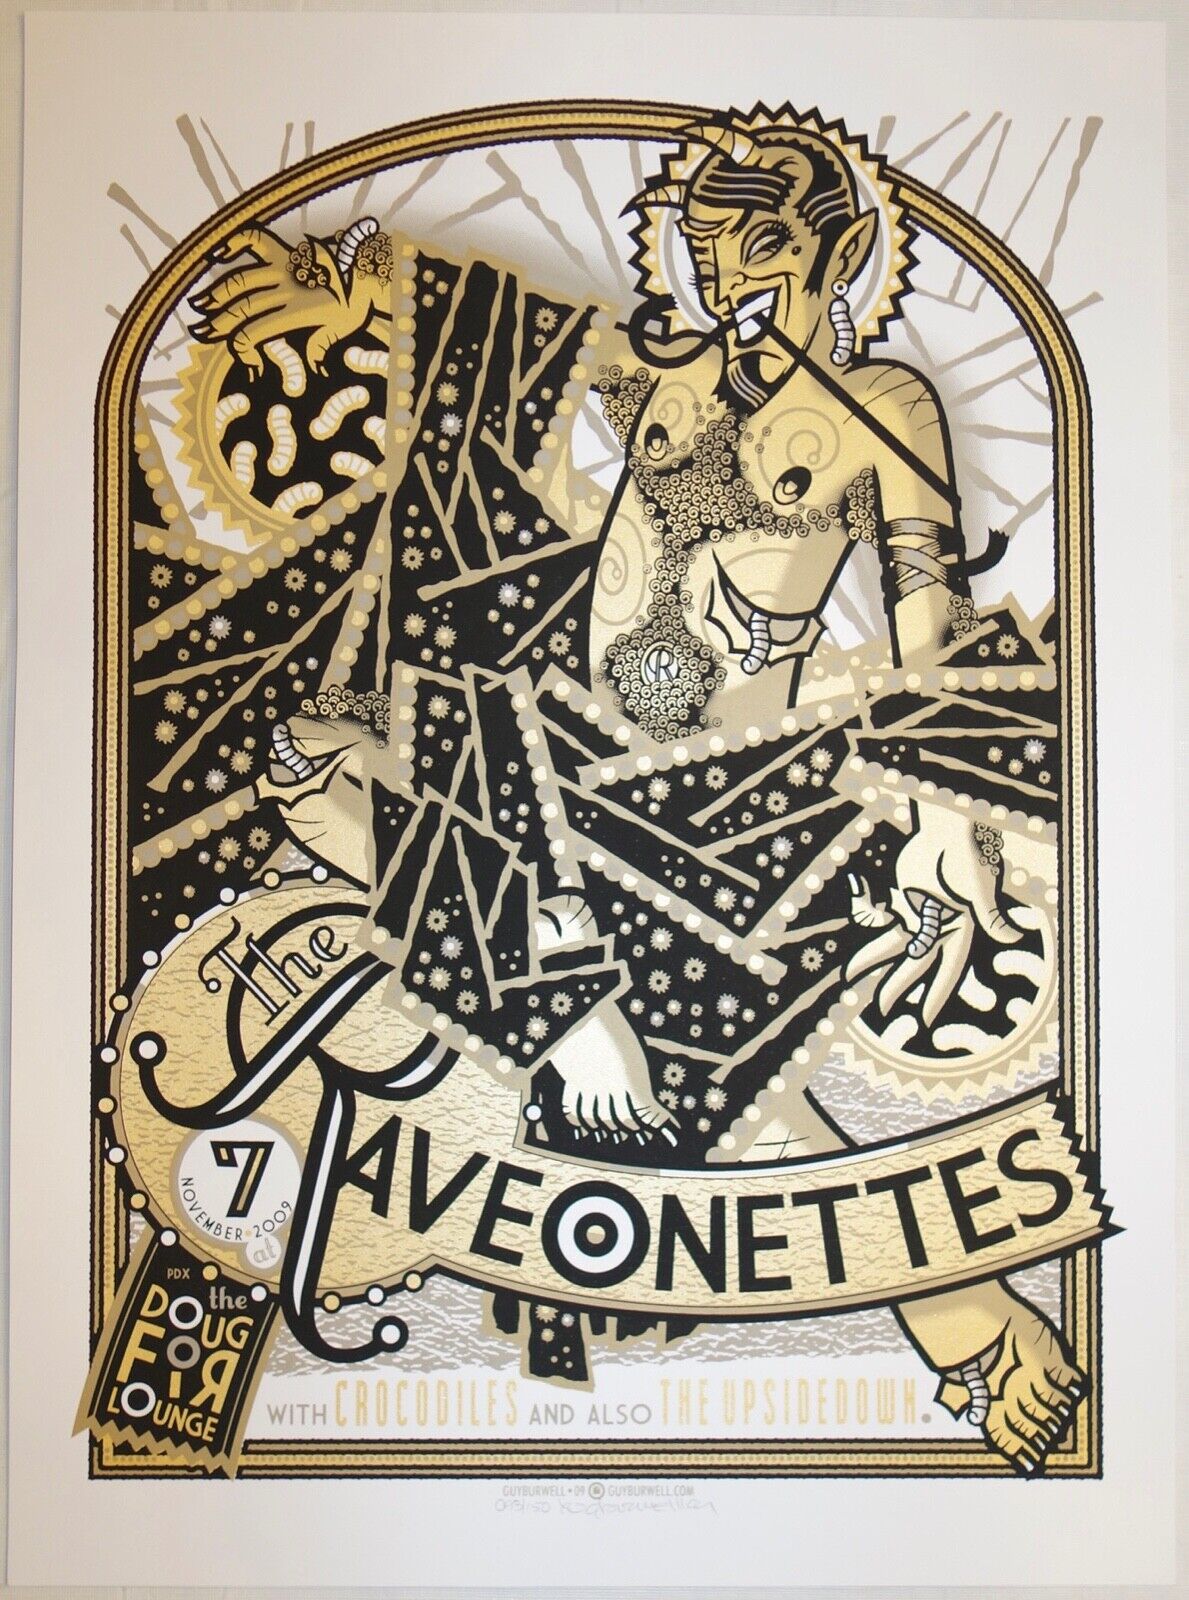 2009 Raveonettes - Portland Silkscreen Concert Poster by Guy Burwell s/n